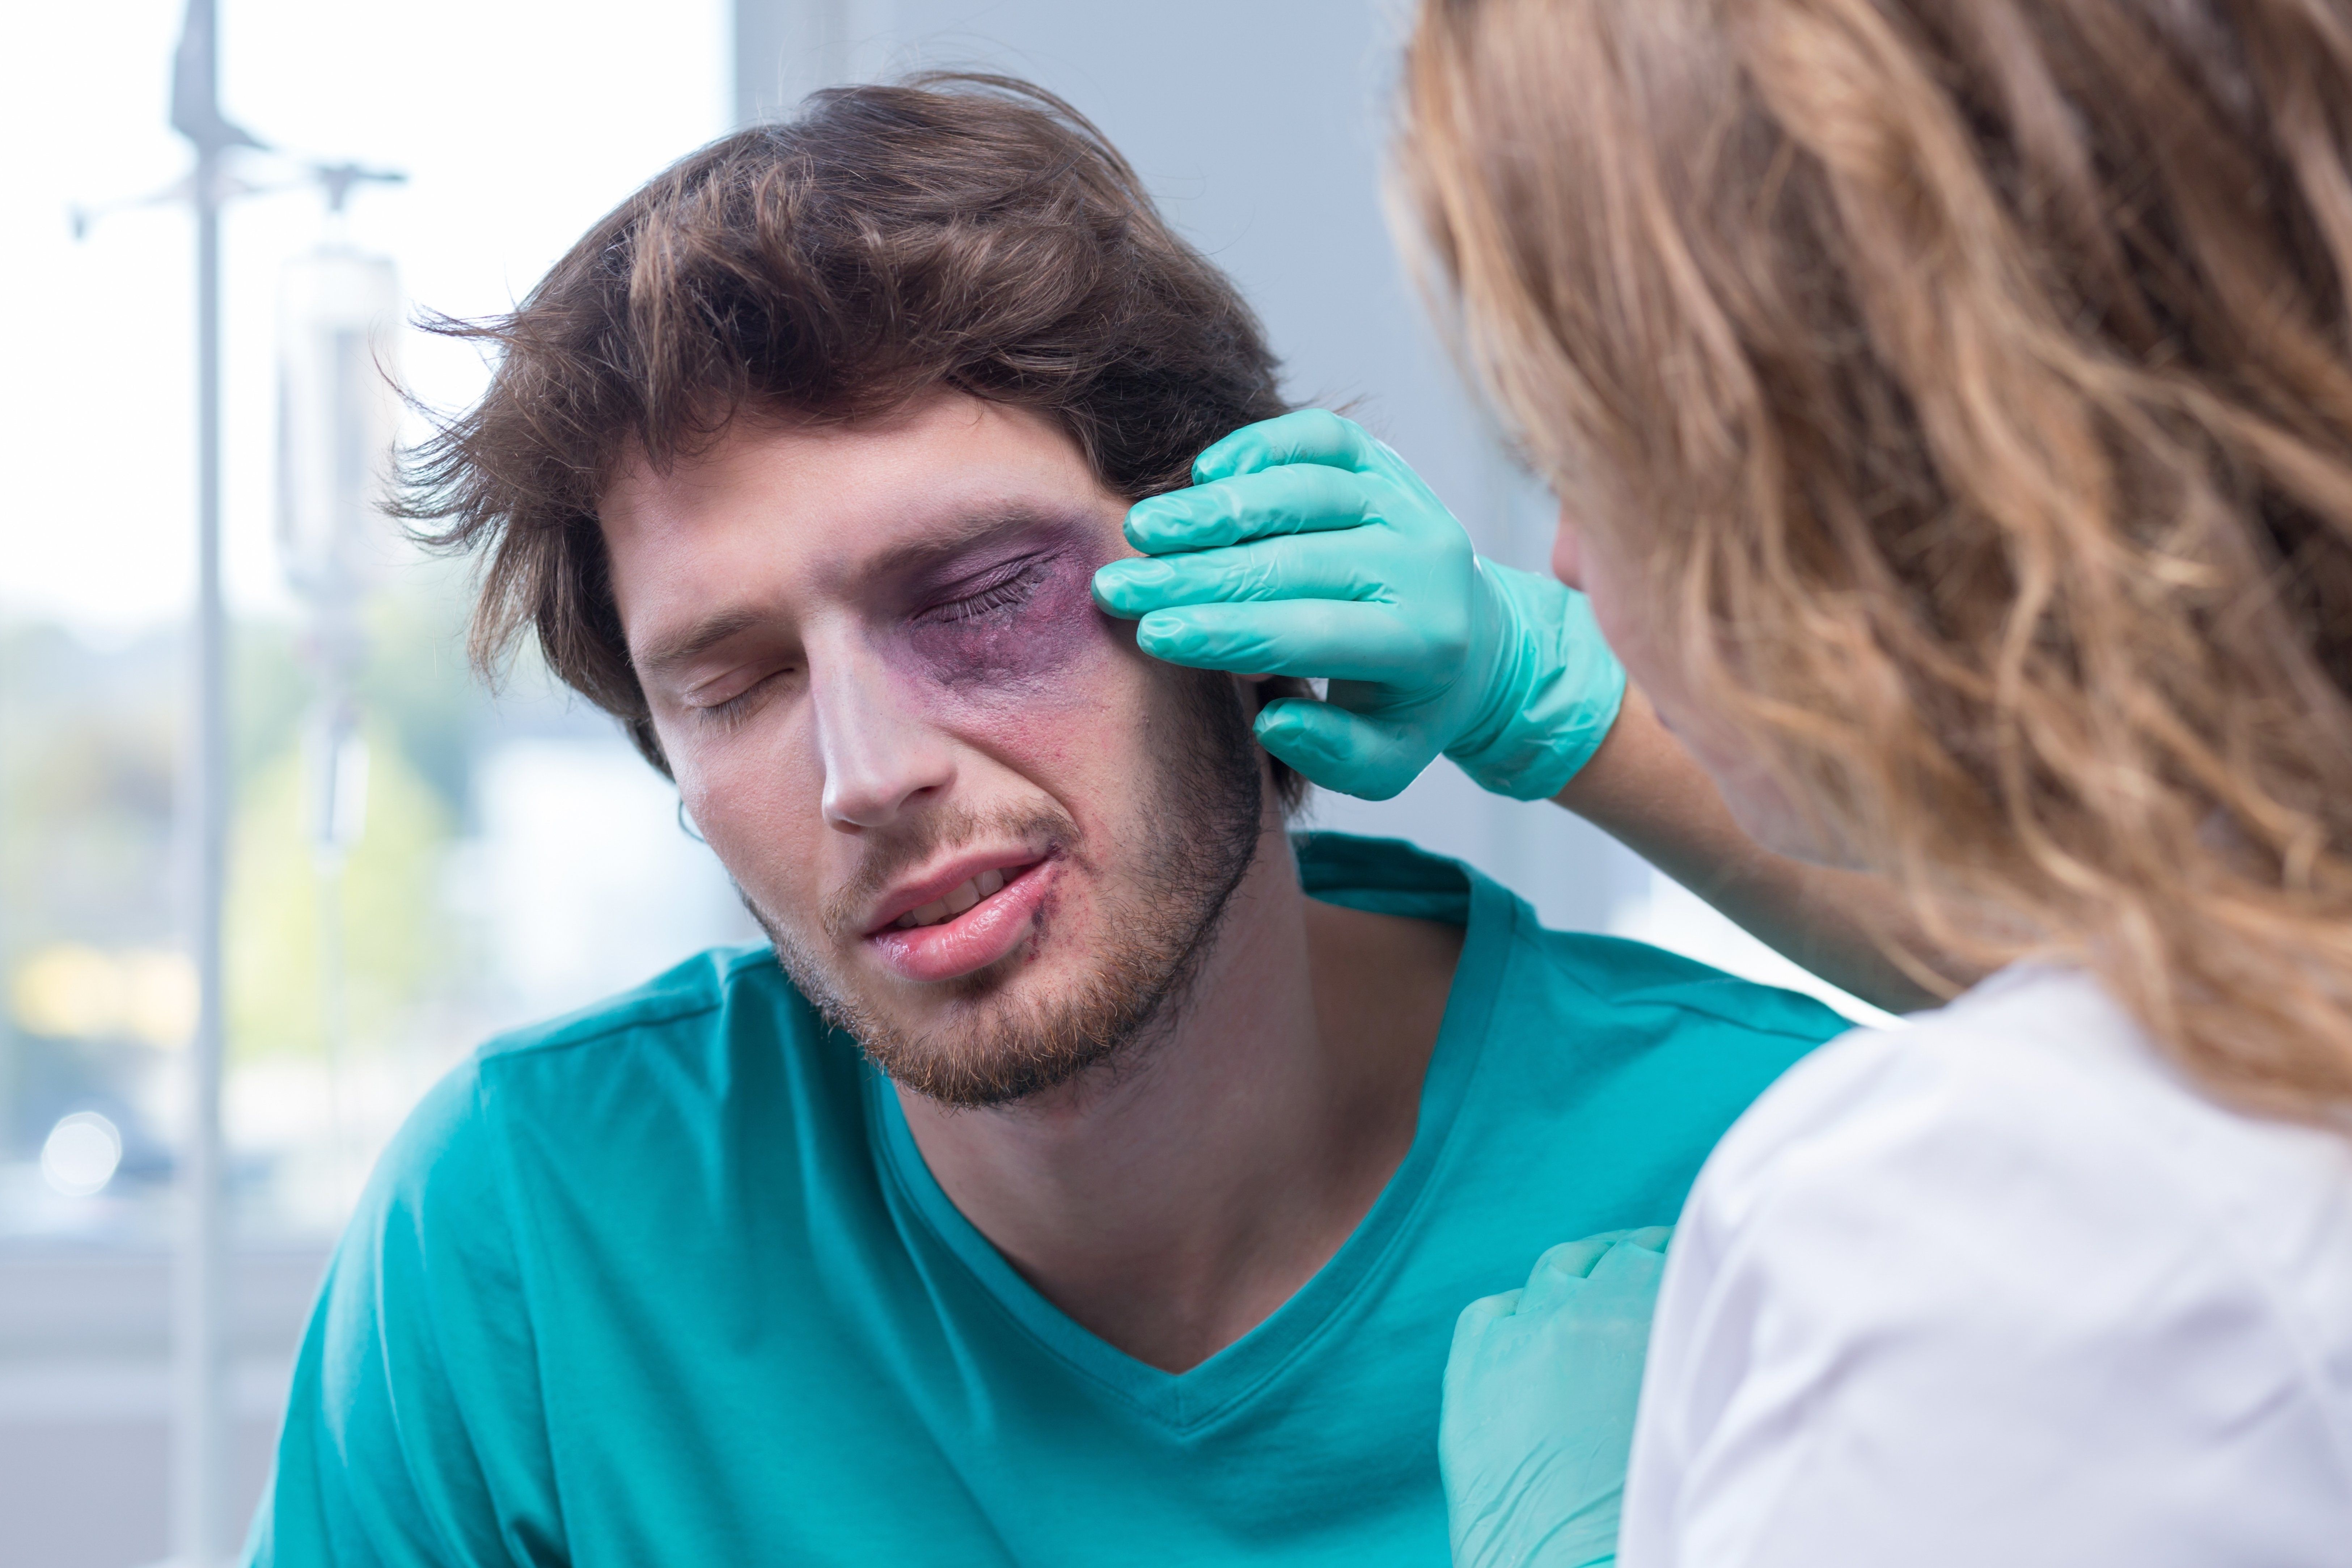 Common Types of Eye Emergencies